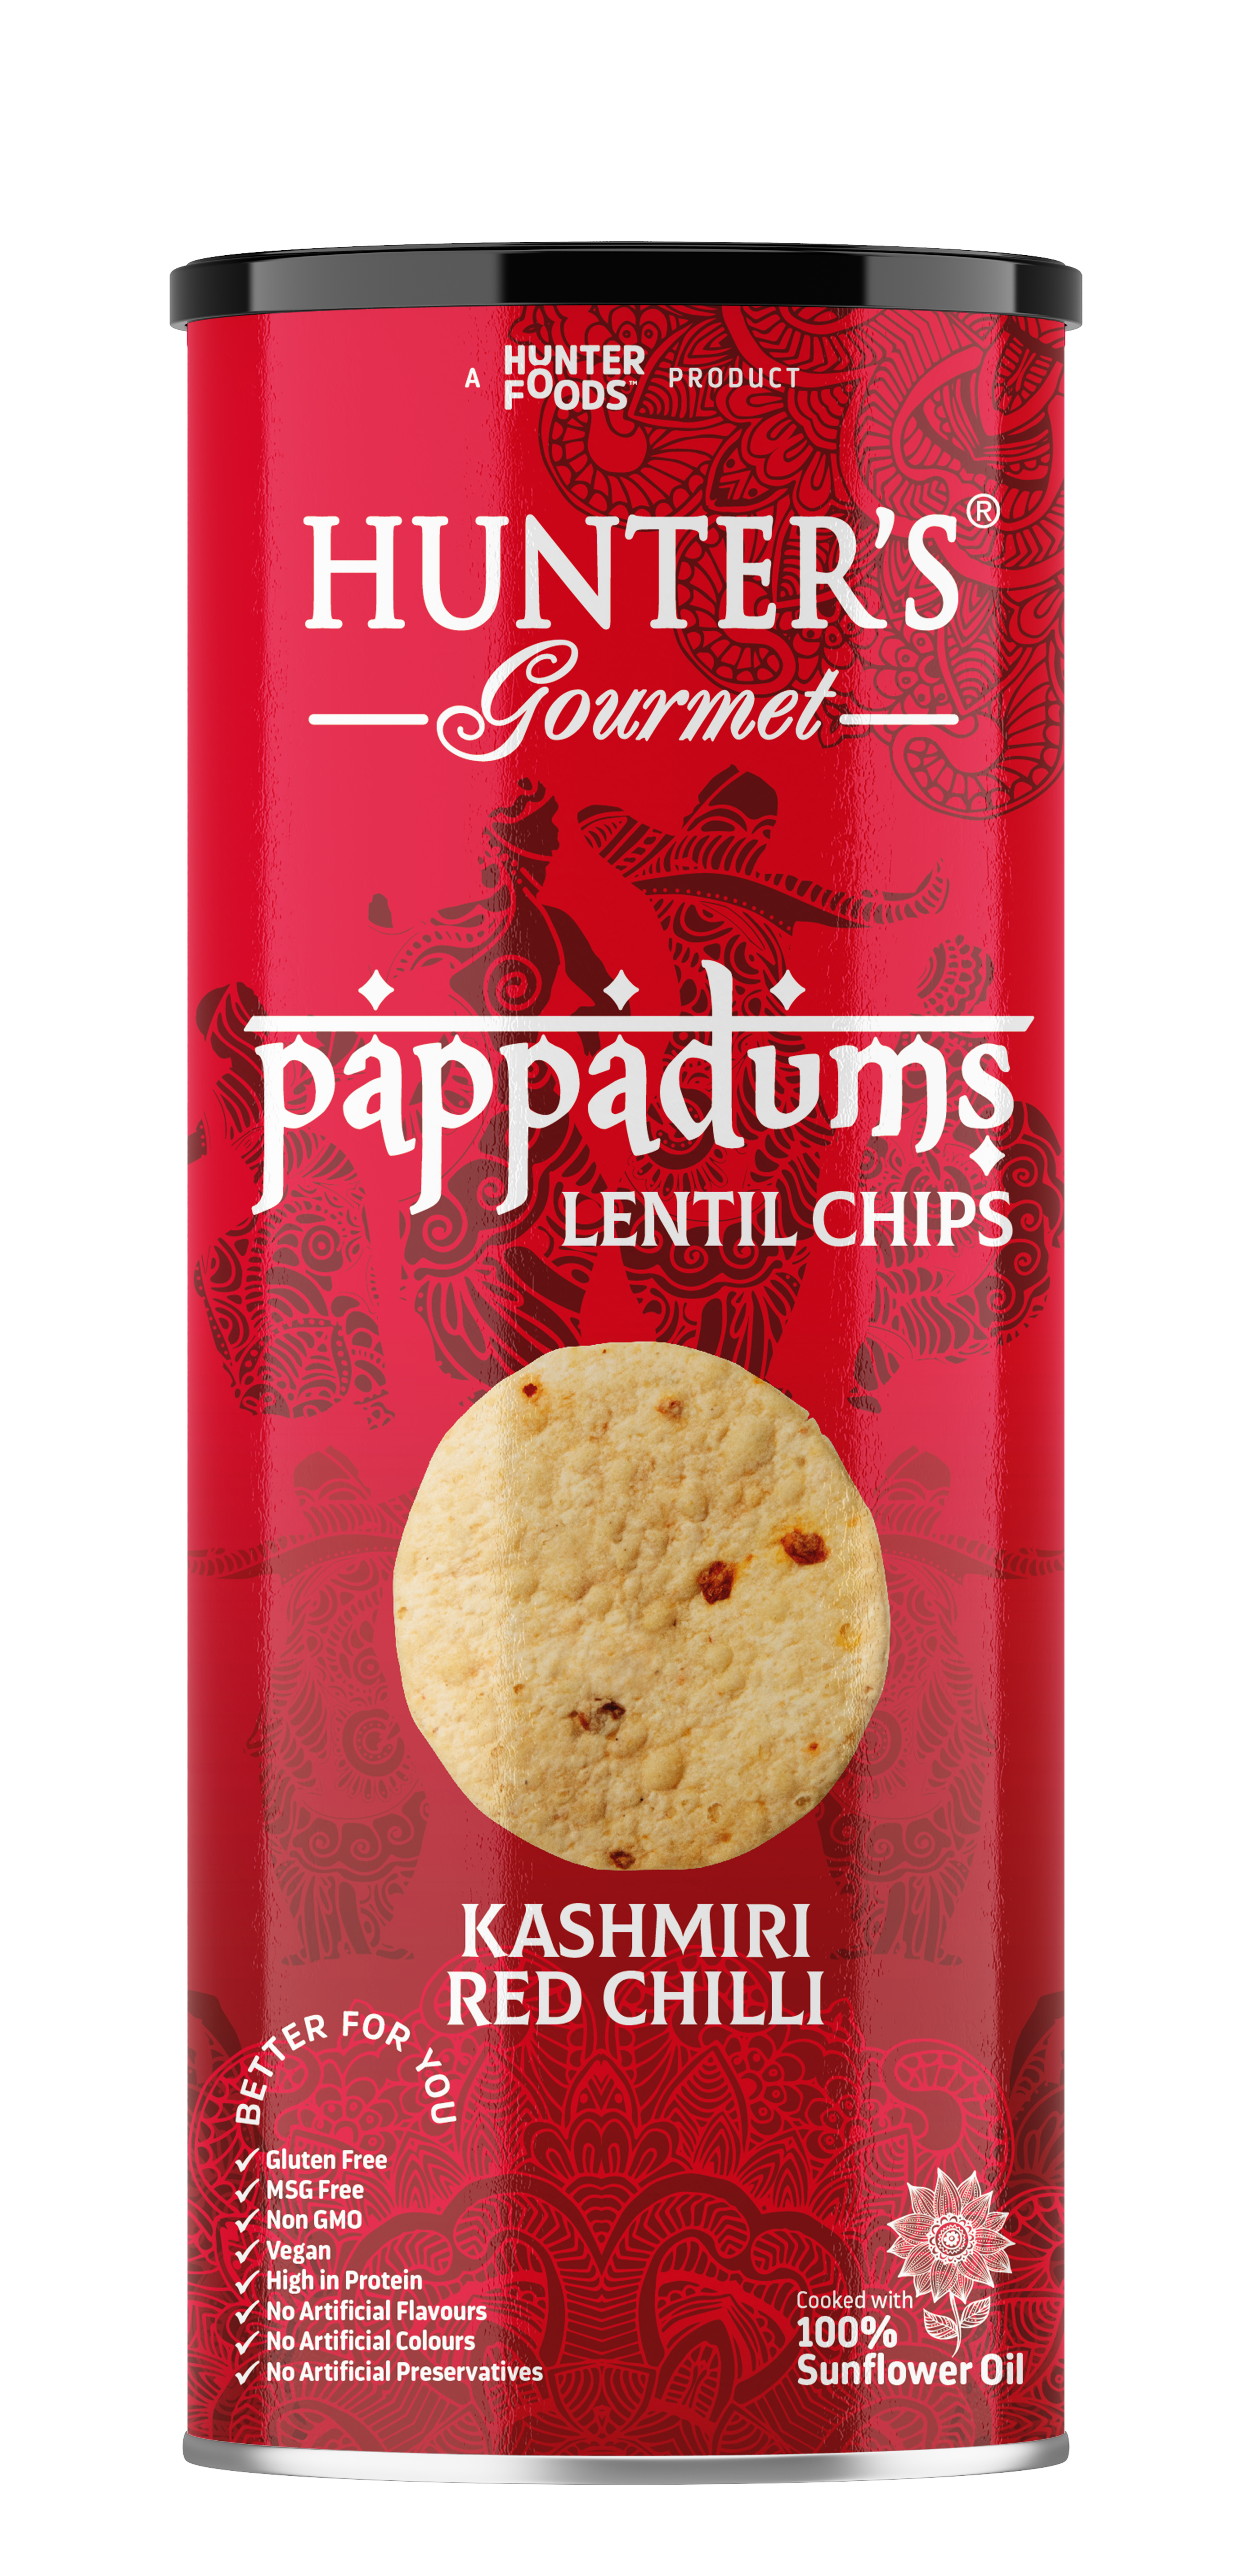 Hunter's Gourmet Pappadums Petite Lentil Chip Kashmiri Red Chilli 12 units per case 120 g